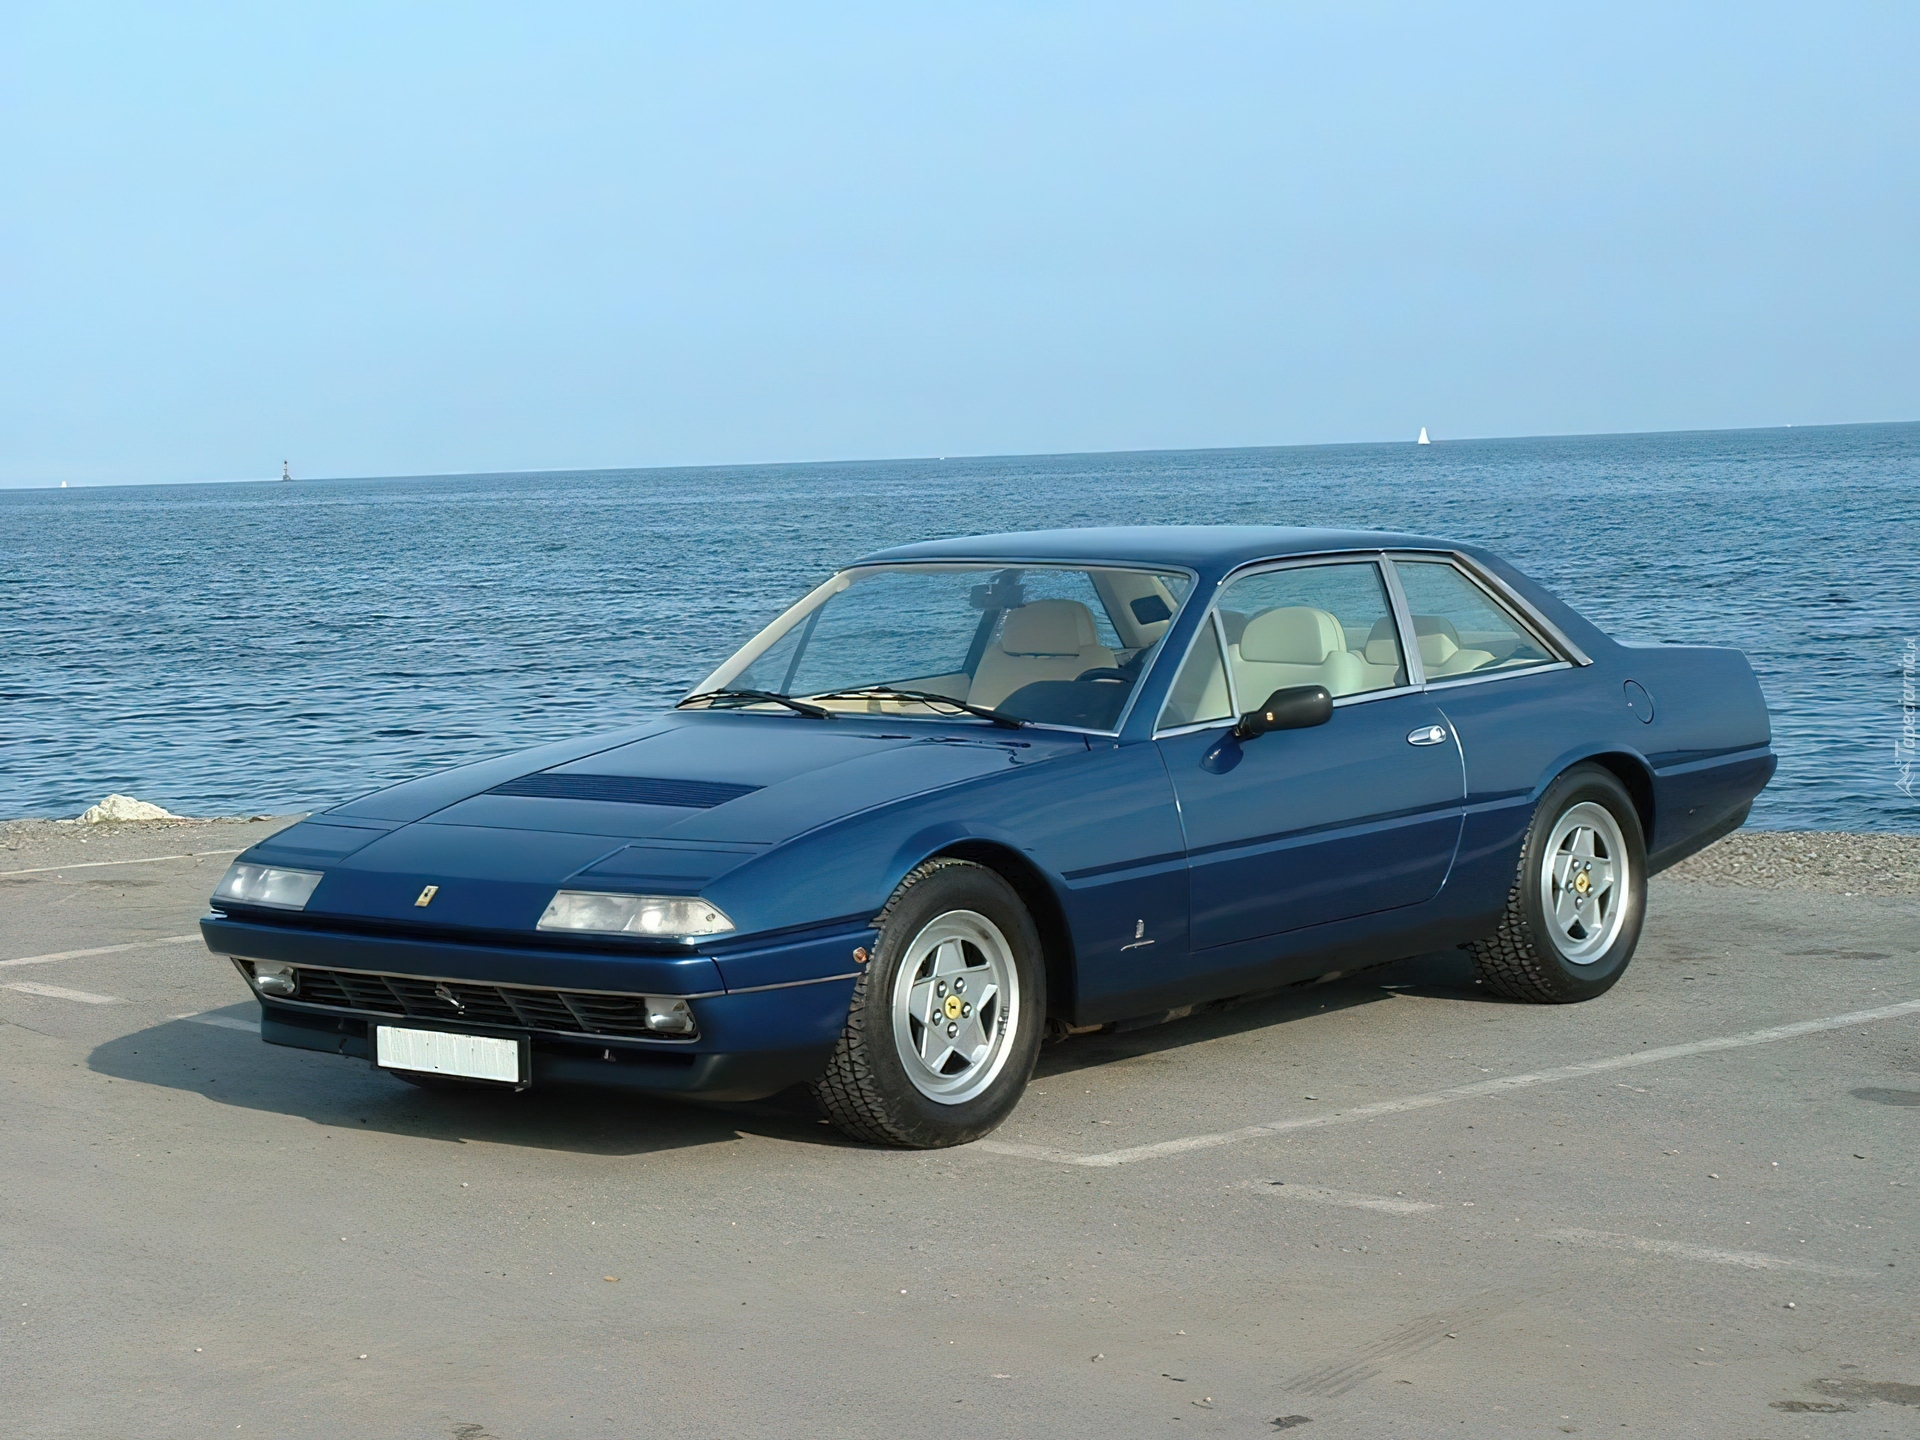 Niebieskie, Ferrari 412, Morze